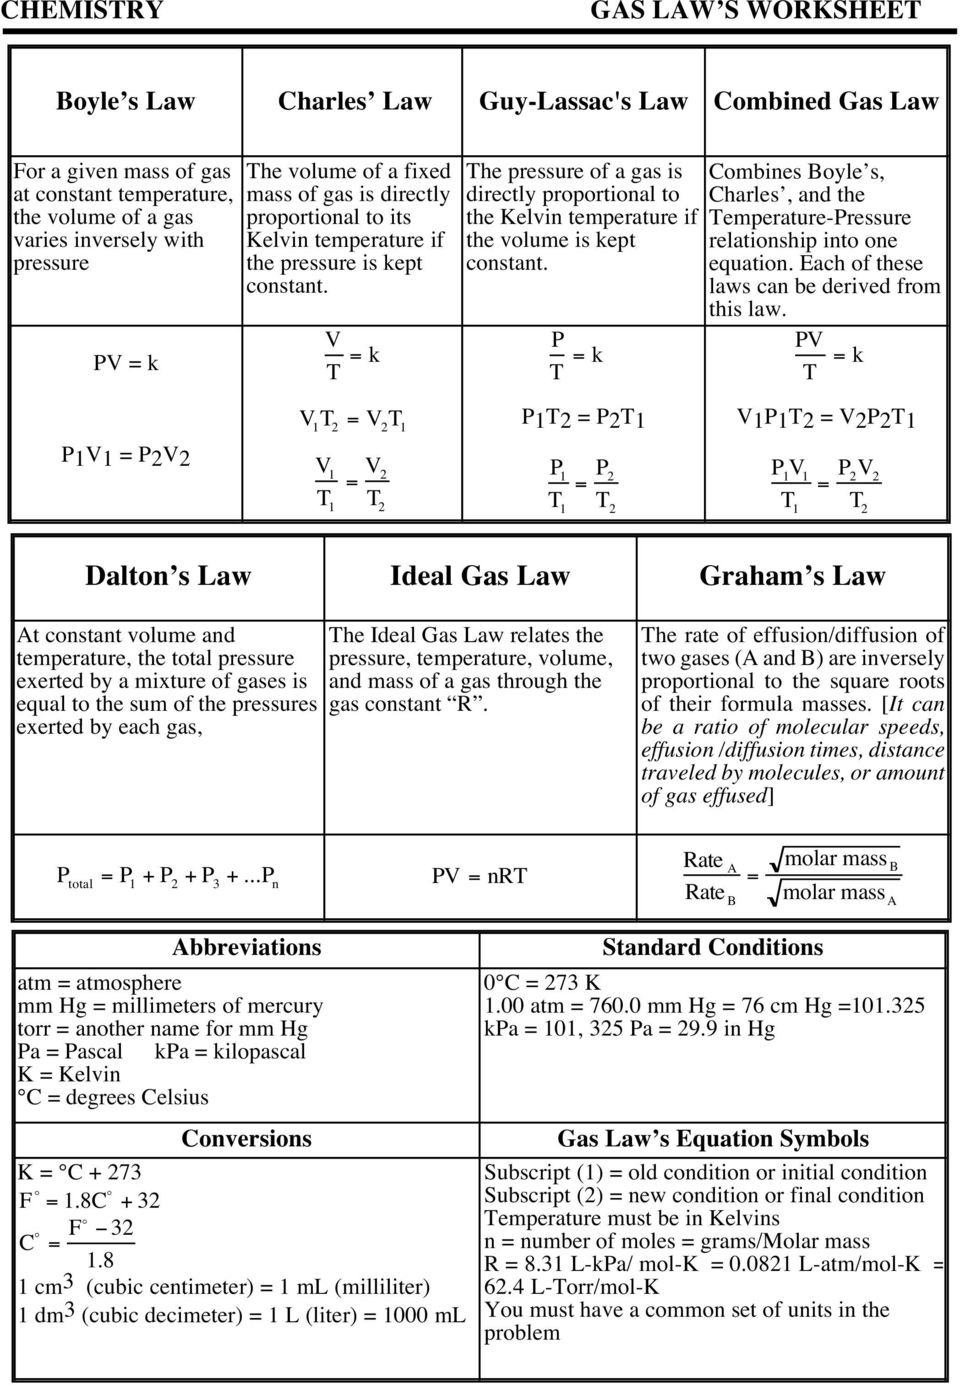 Chemistry Gas Law S Worksheet  Pdf